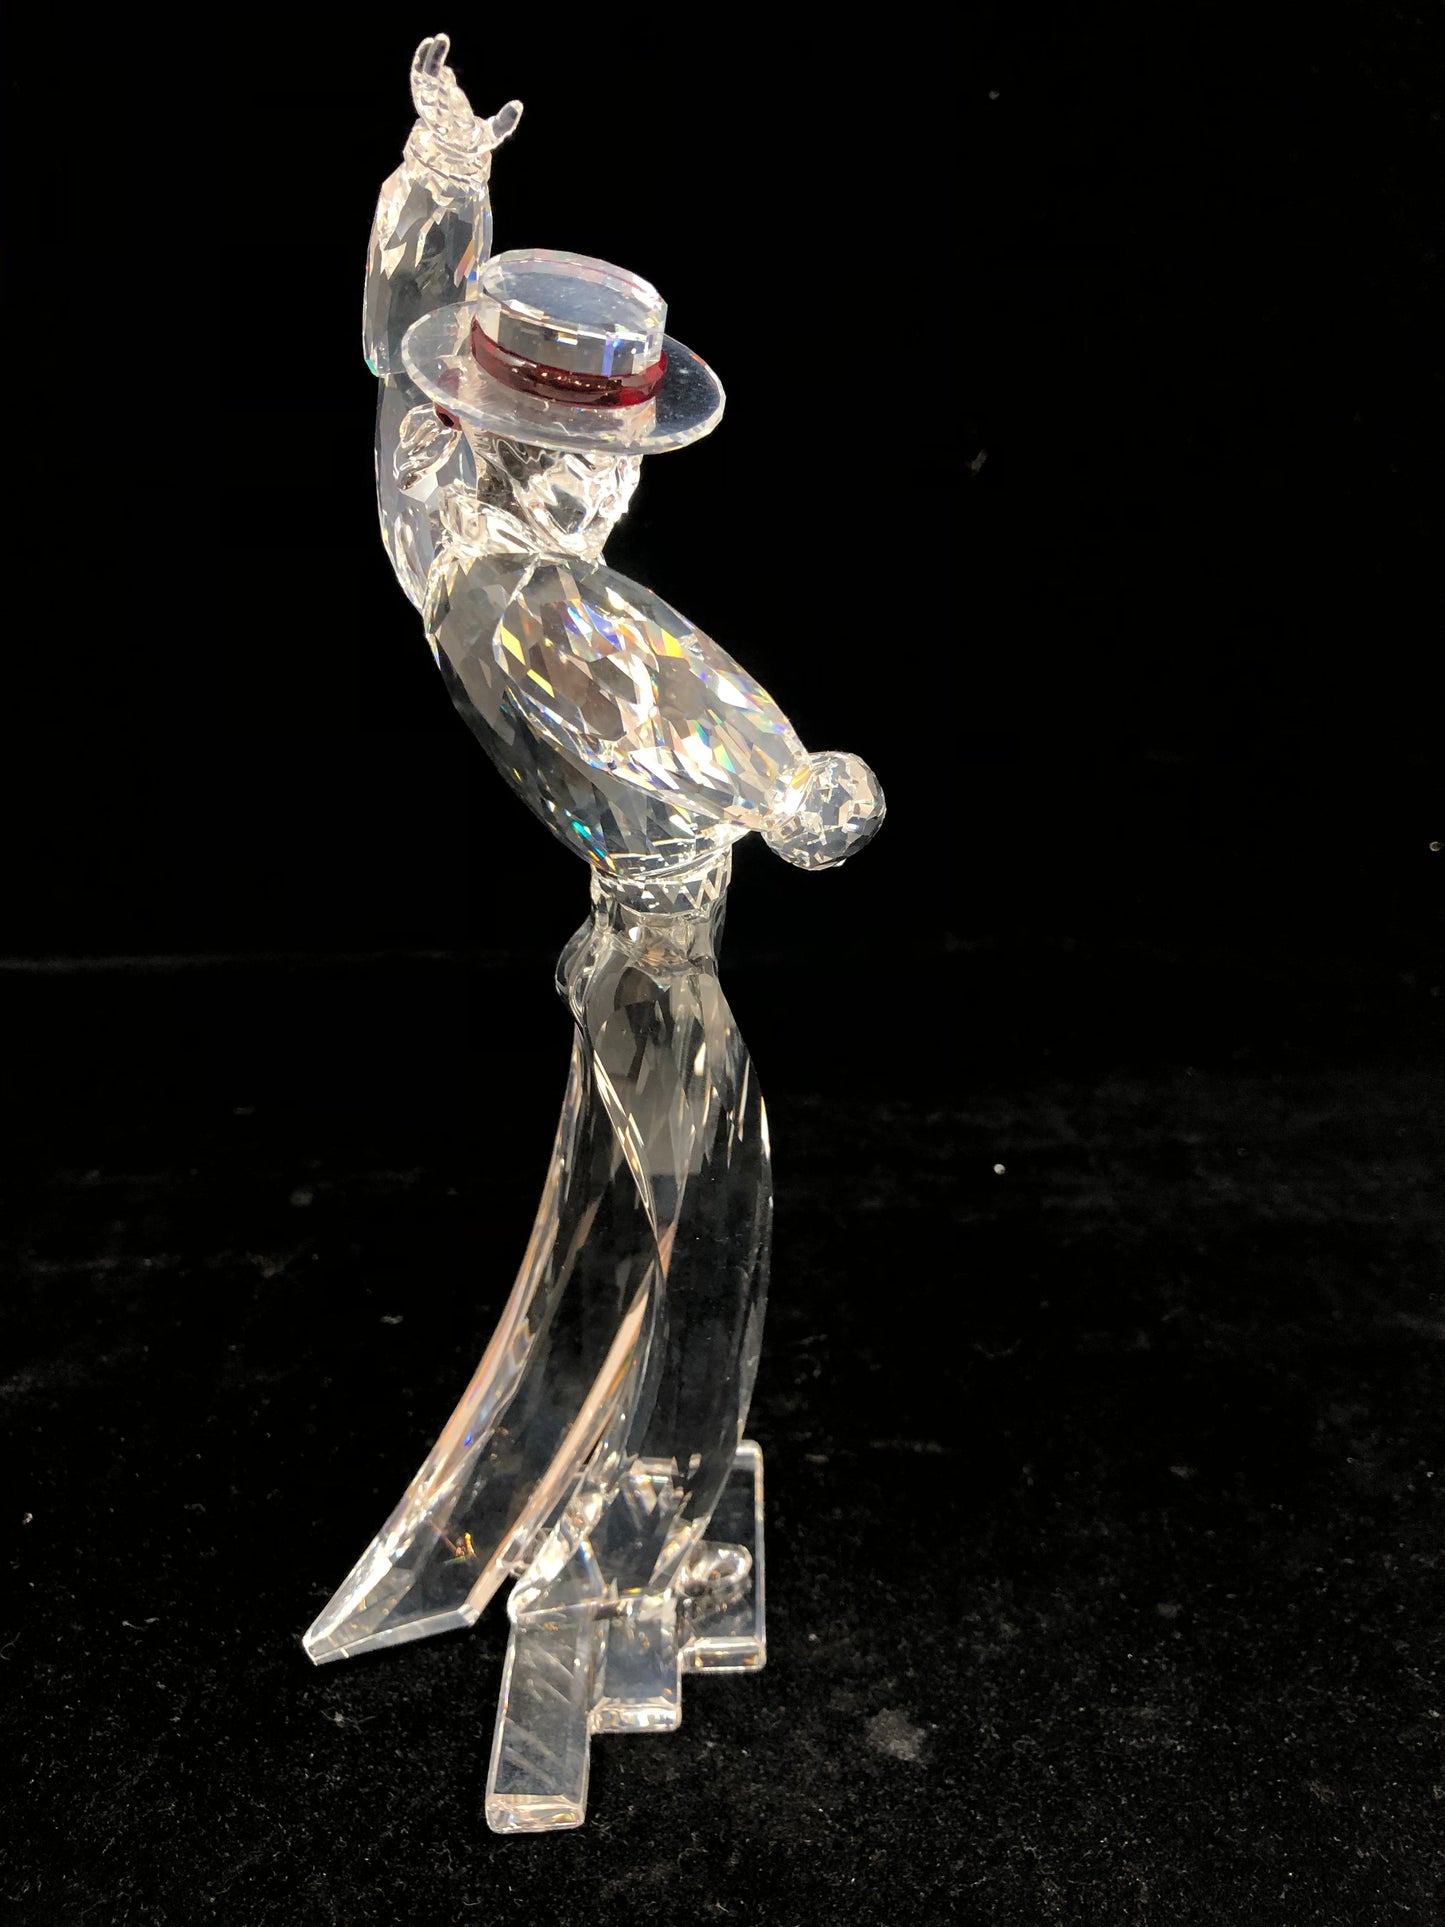 Swarovski "Magic of Dance" Antonio SCS 2003 Crystal Figurine